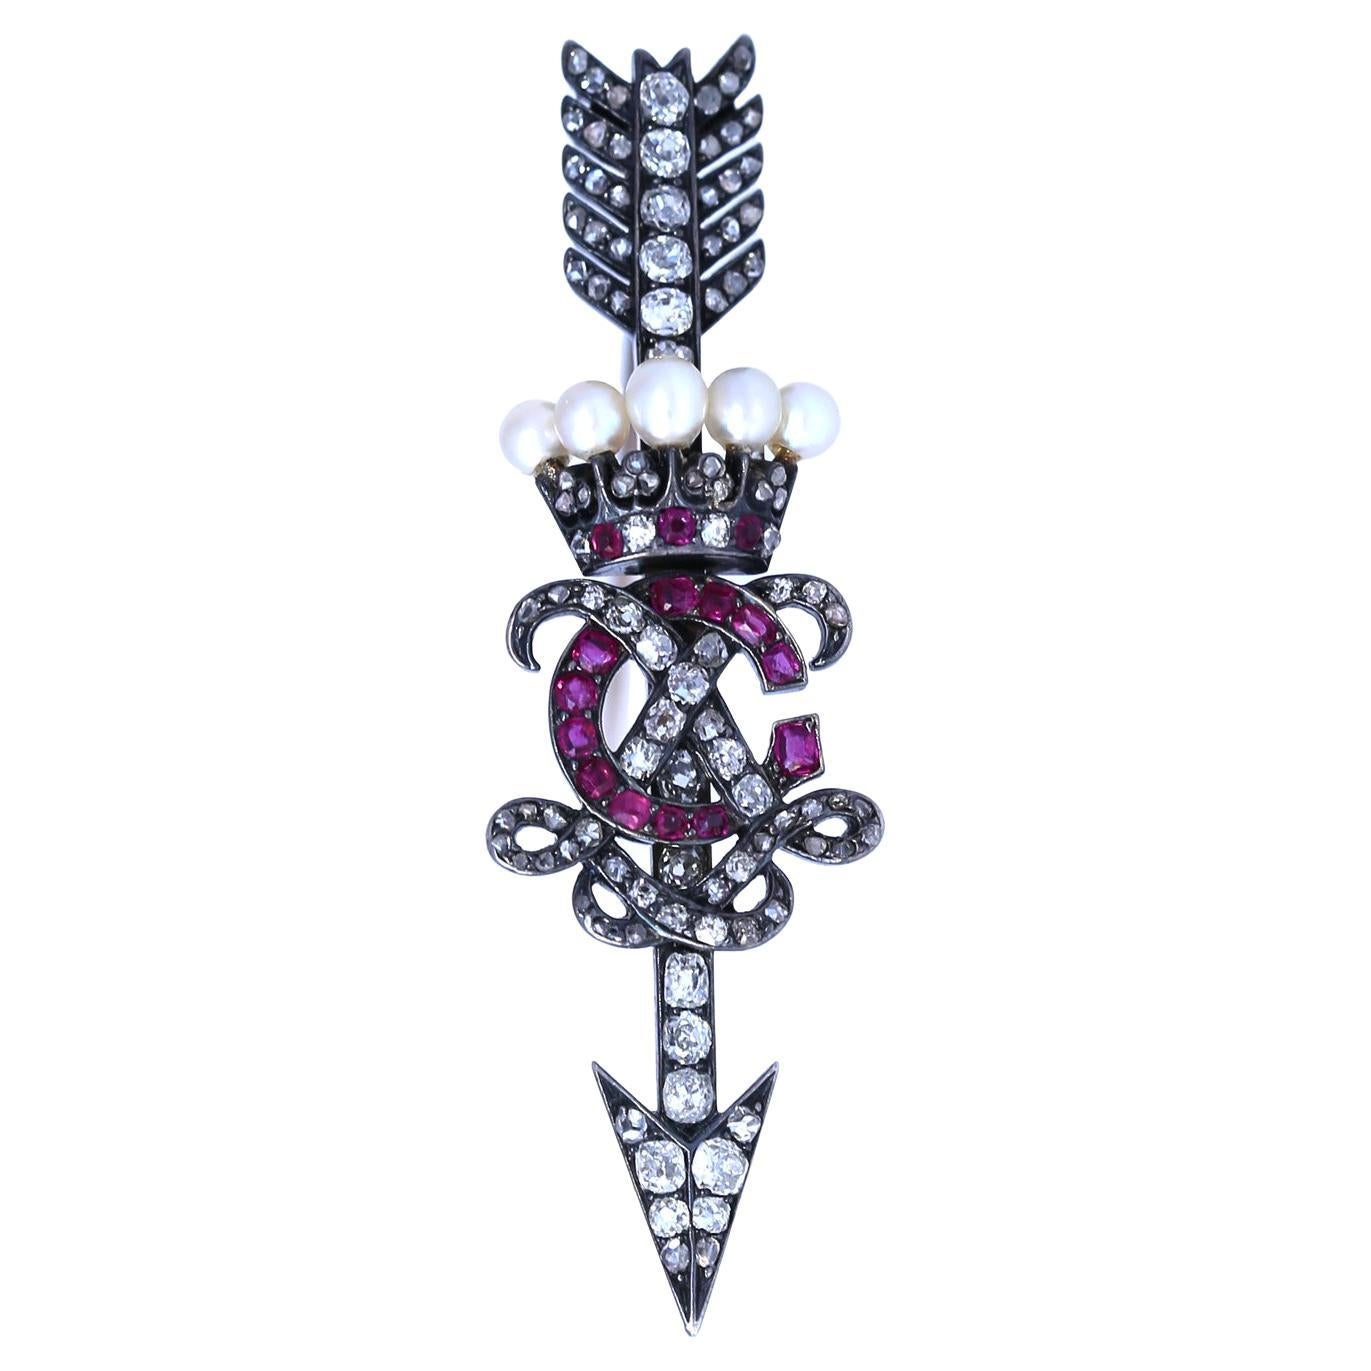 Viktorianische Brosche Arrow Crown Rubine Diamanten Perlen Gold Buchstaben C X, 1900